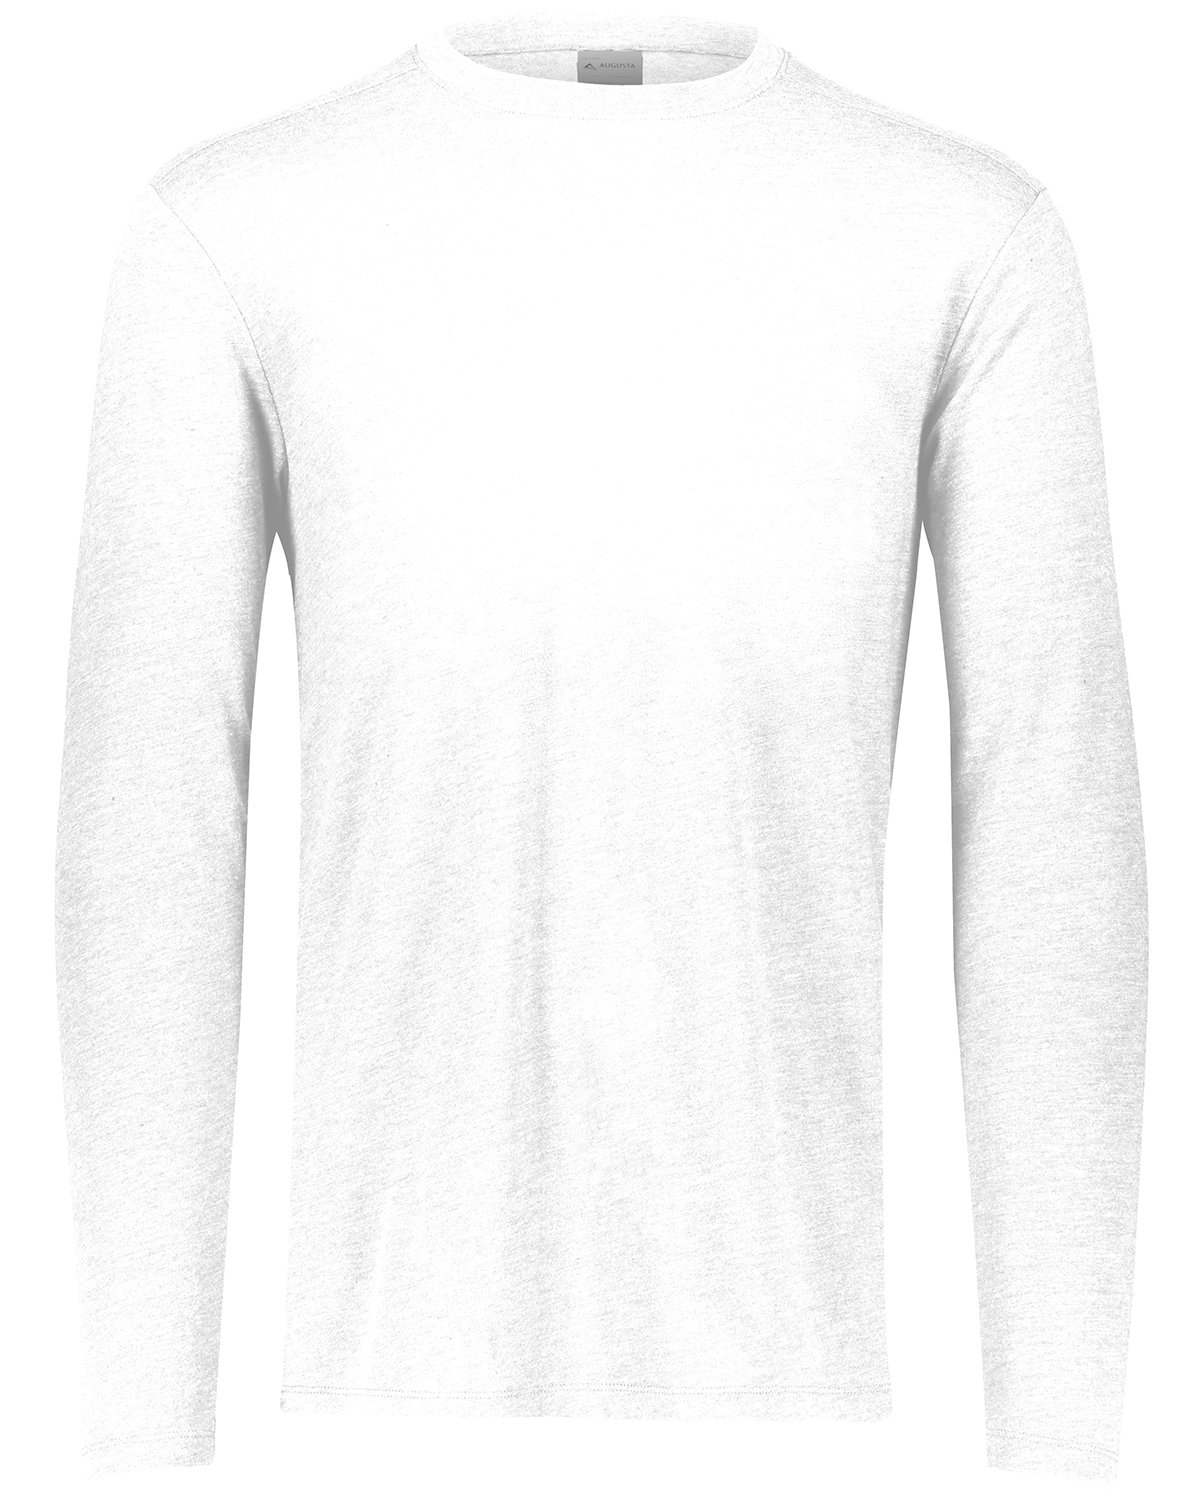 Buy/Shop T-Shirts – A4 Online in NJ – Bordova Uniforms | Sport-T-Shirts